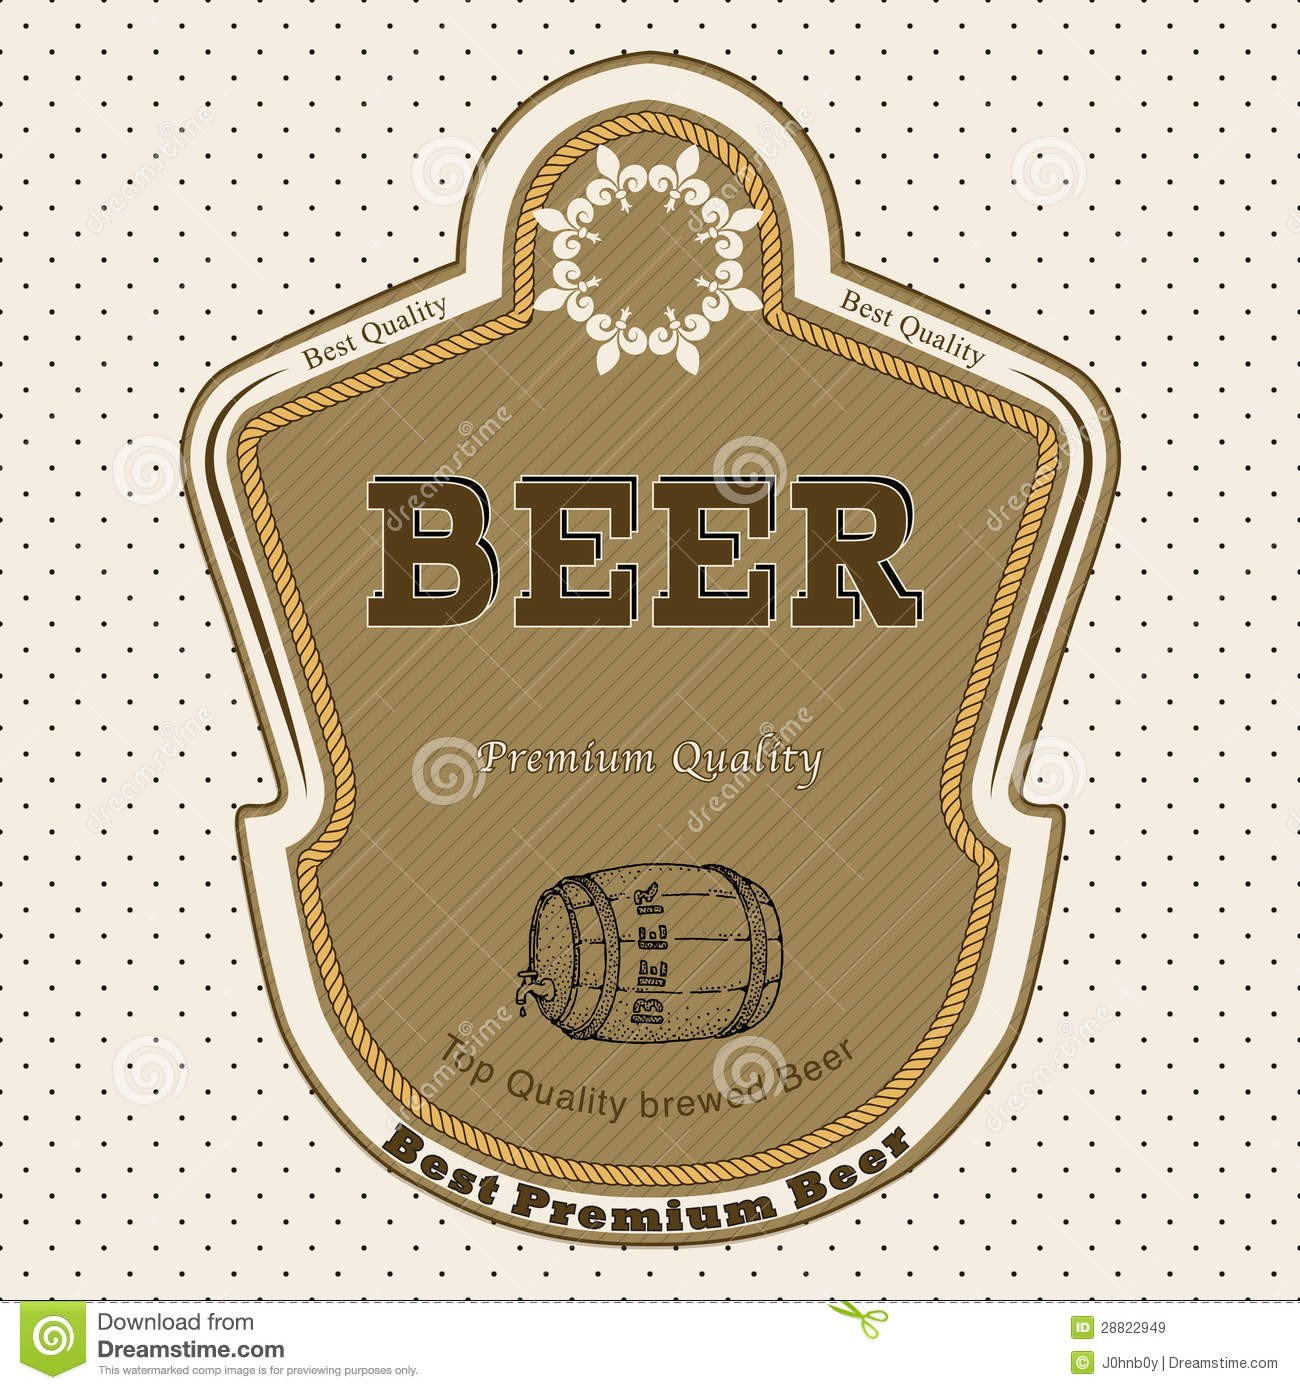 Beer Bottle Label Template Beer Label Royalty Free Stock Image